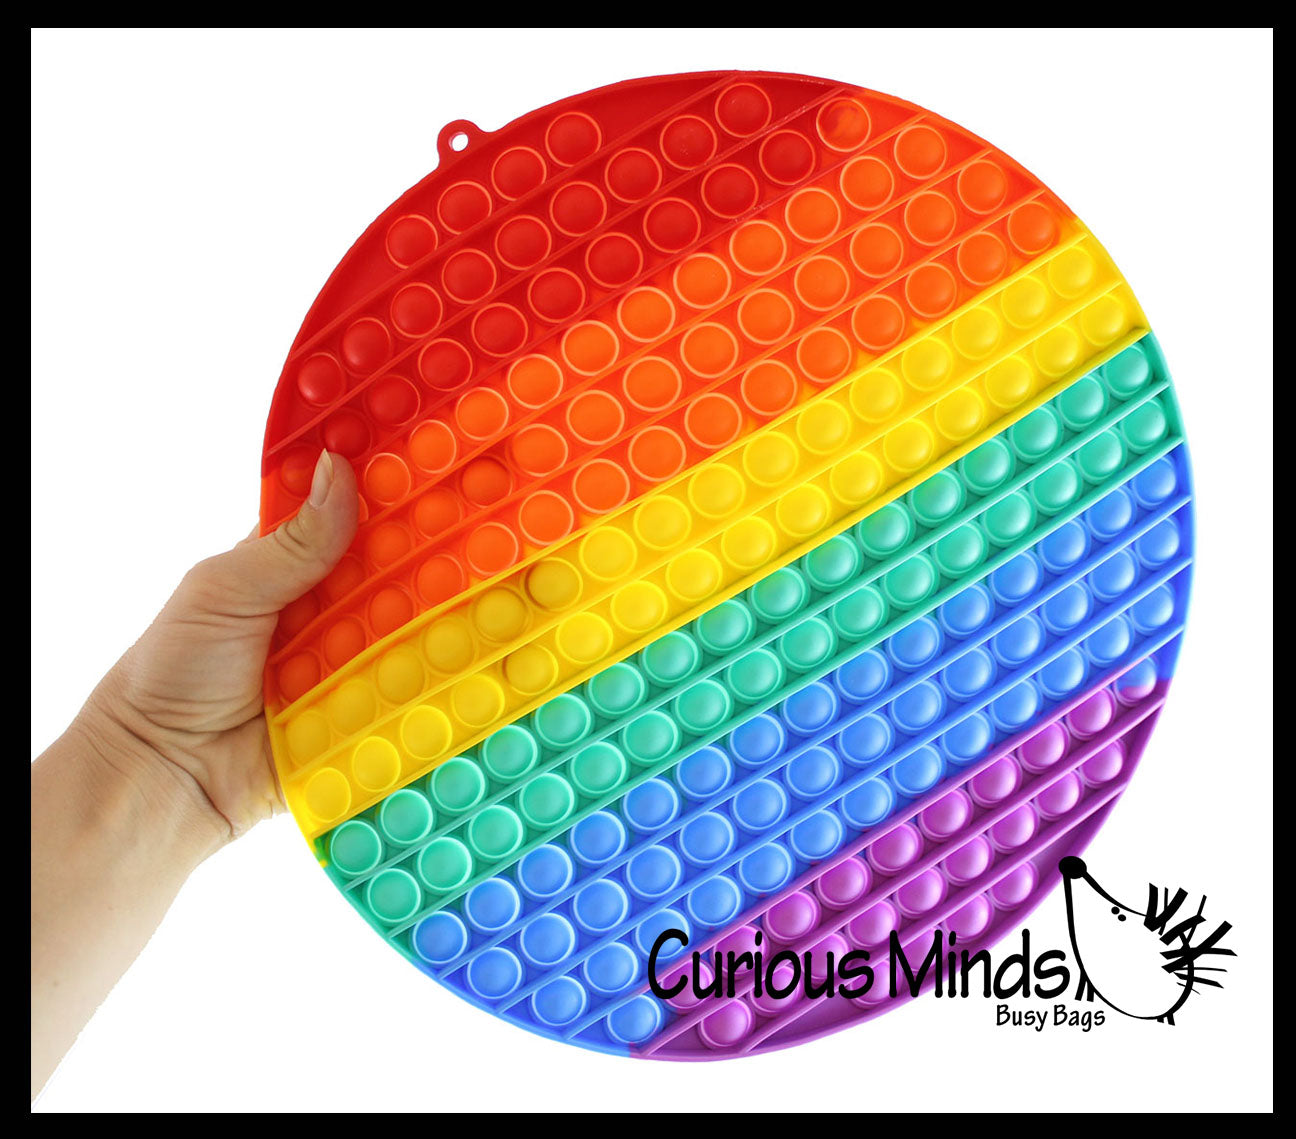 BULK - WHOLESALE - SALE - Jumbo Circle Bubble Pop Game Rainbow